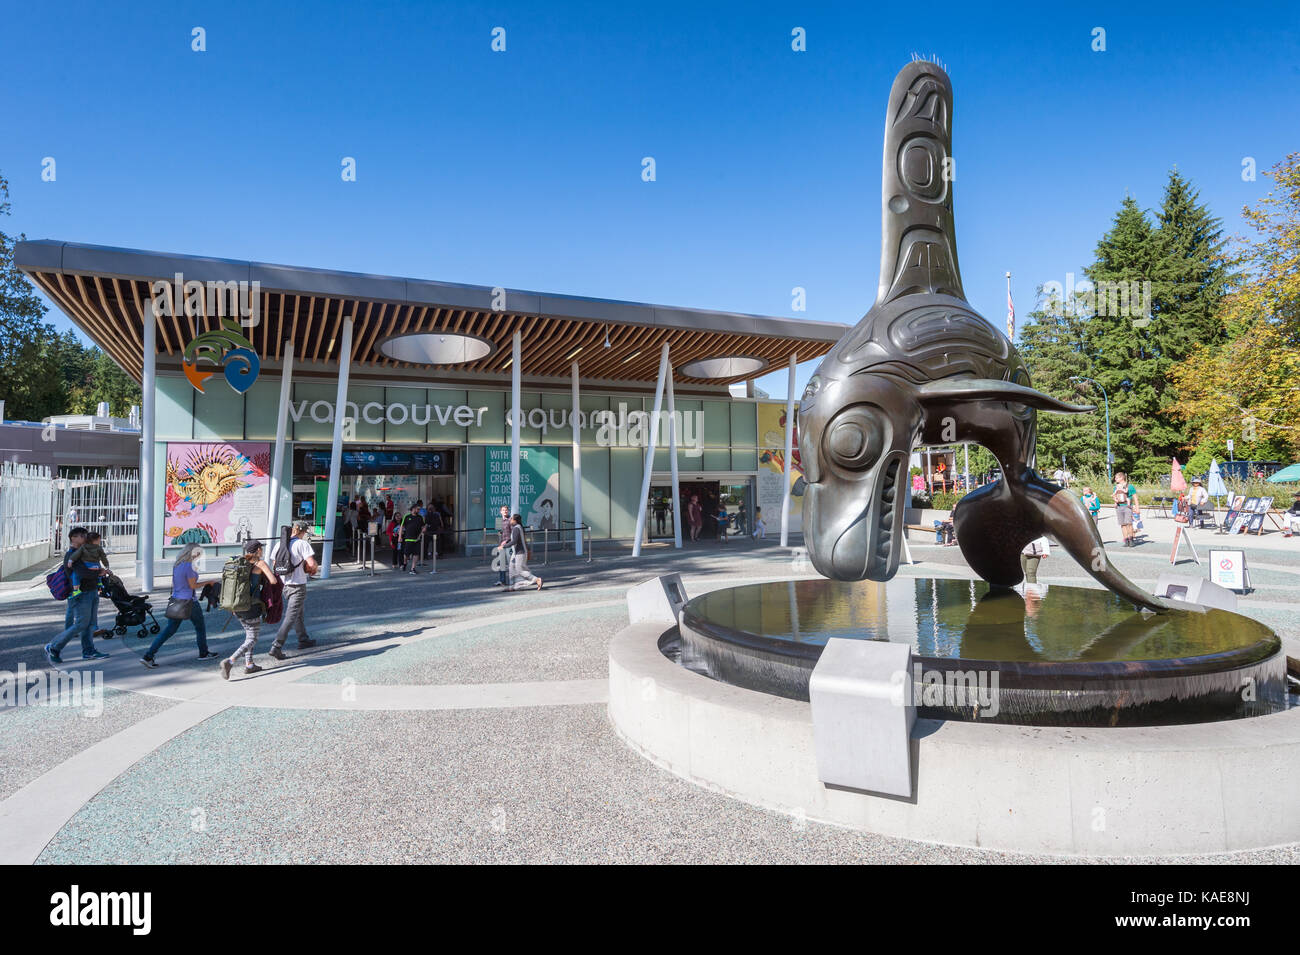 Vancouver Aquarium in Stanley Park with Haida artist Bill Reid sculpture 'Chief of the Undersea World' (September 2017) Stock Photo